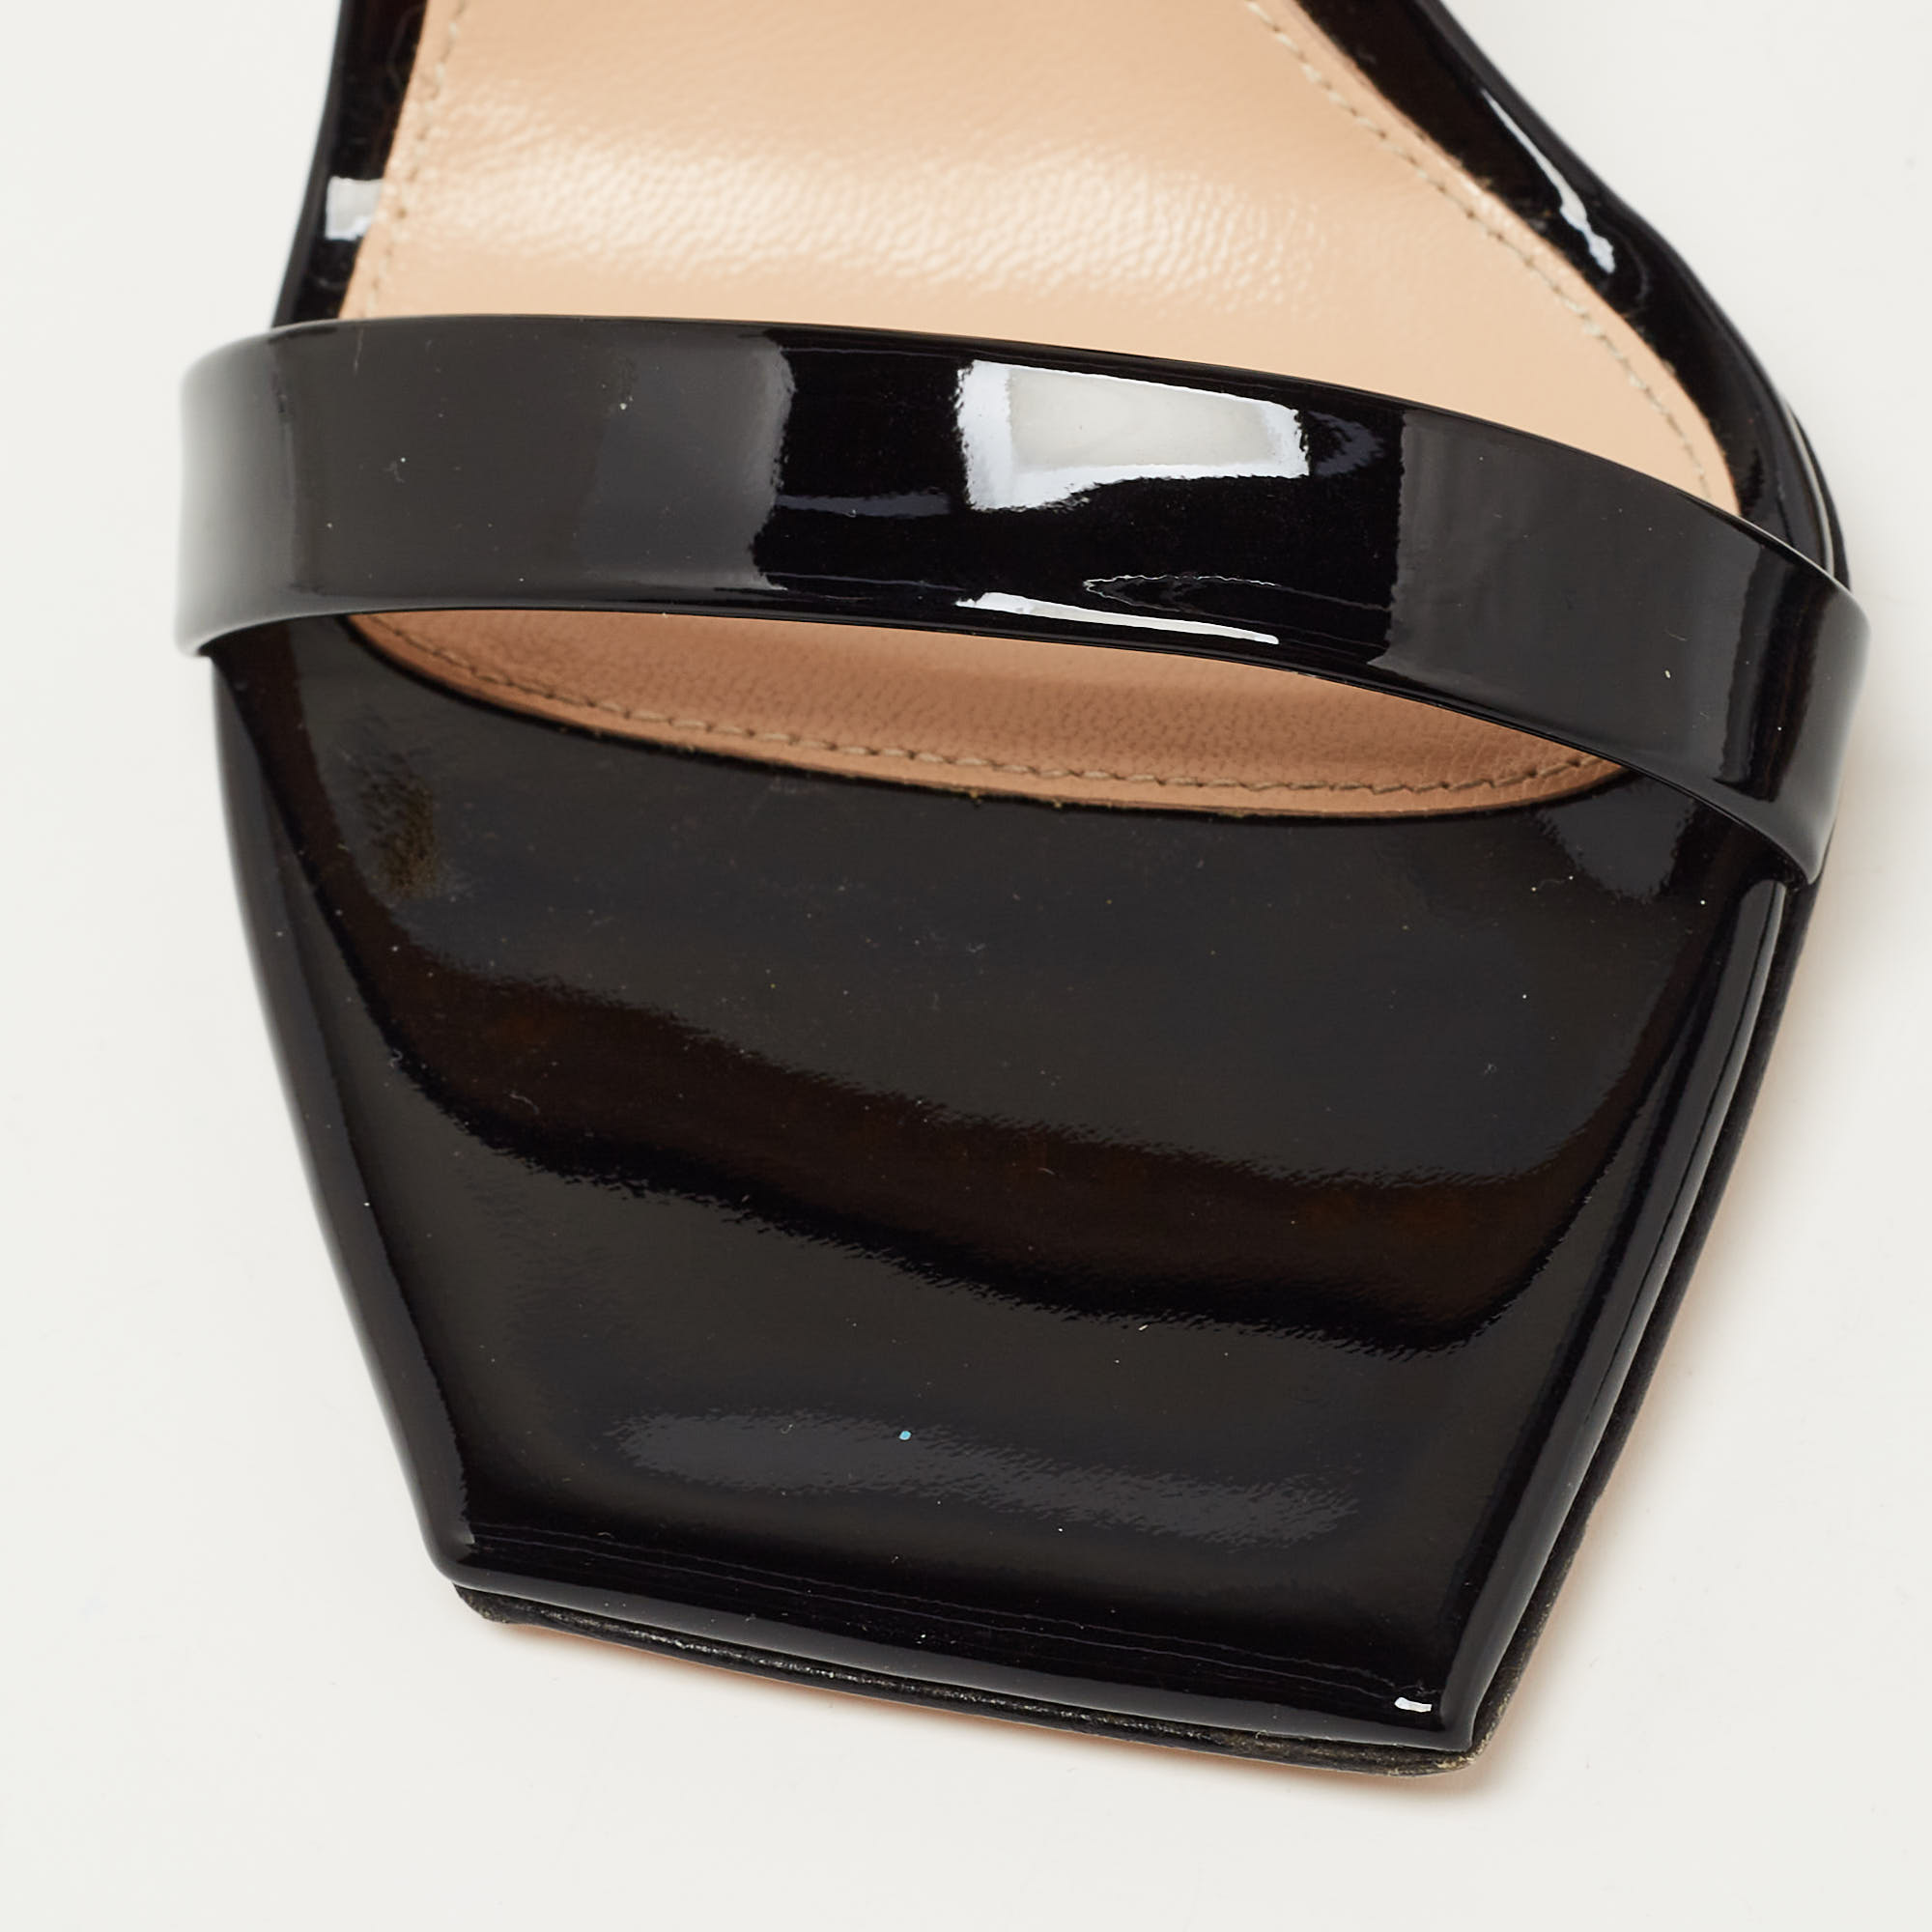 Gianvito Rossi Black Patent Leather Ribbon Slingback Sandals Size 37